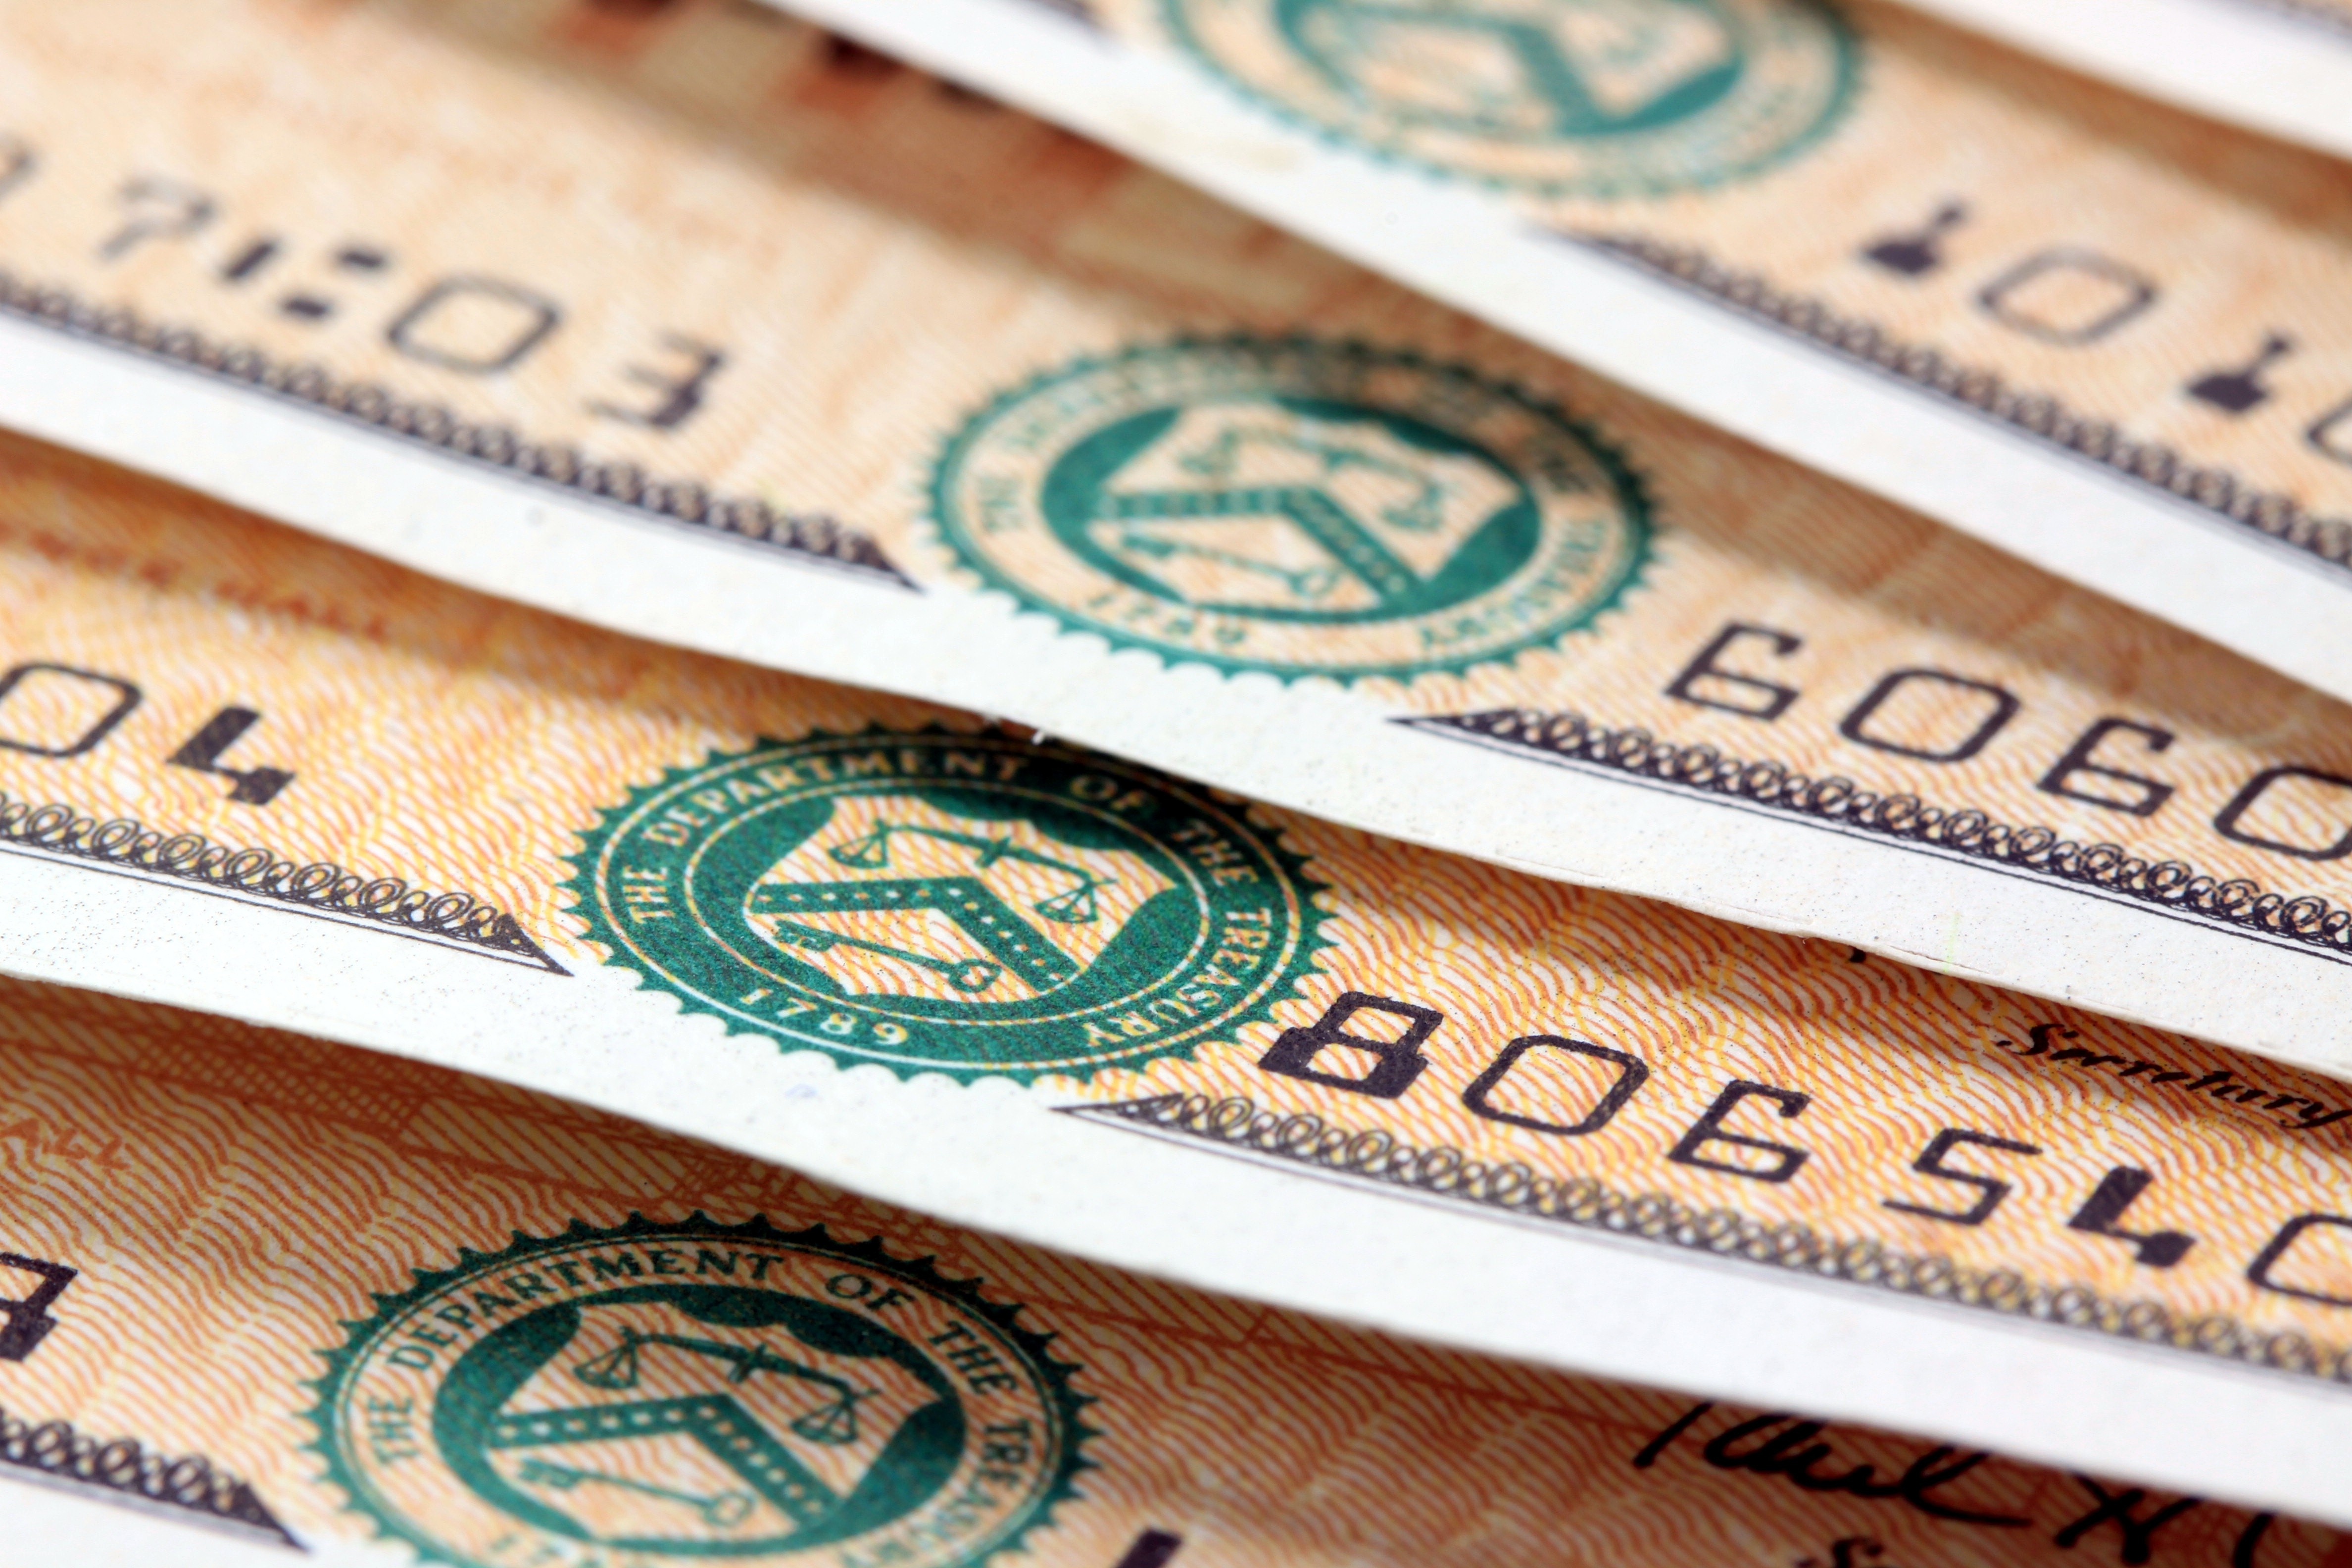 Close-up photo of the bottom edges of U.S. Treasury savings bonds, showing Treasury seal and serial numbers.